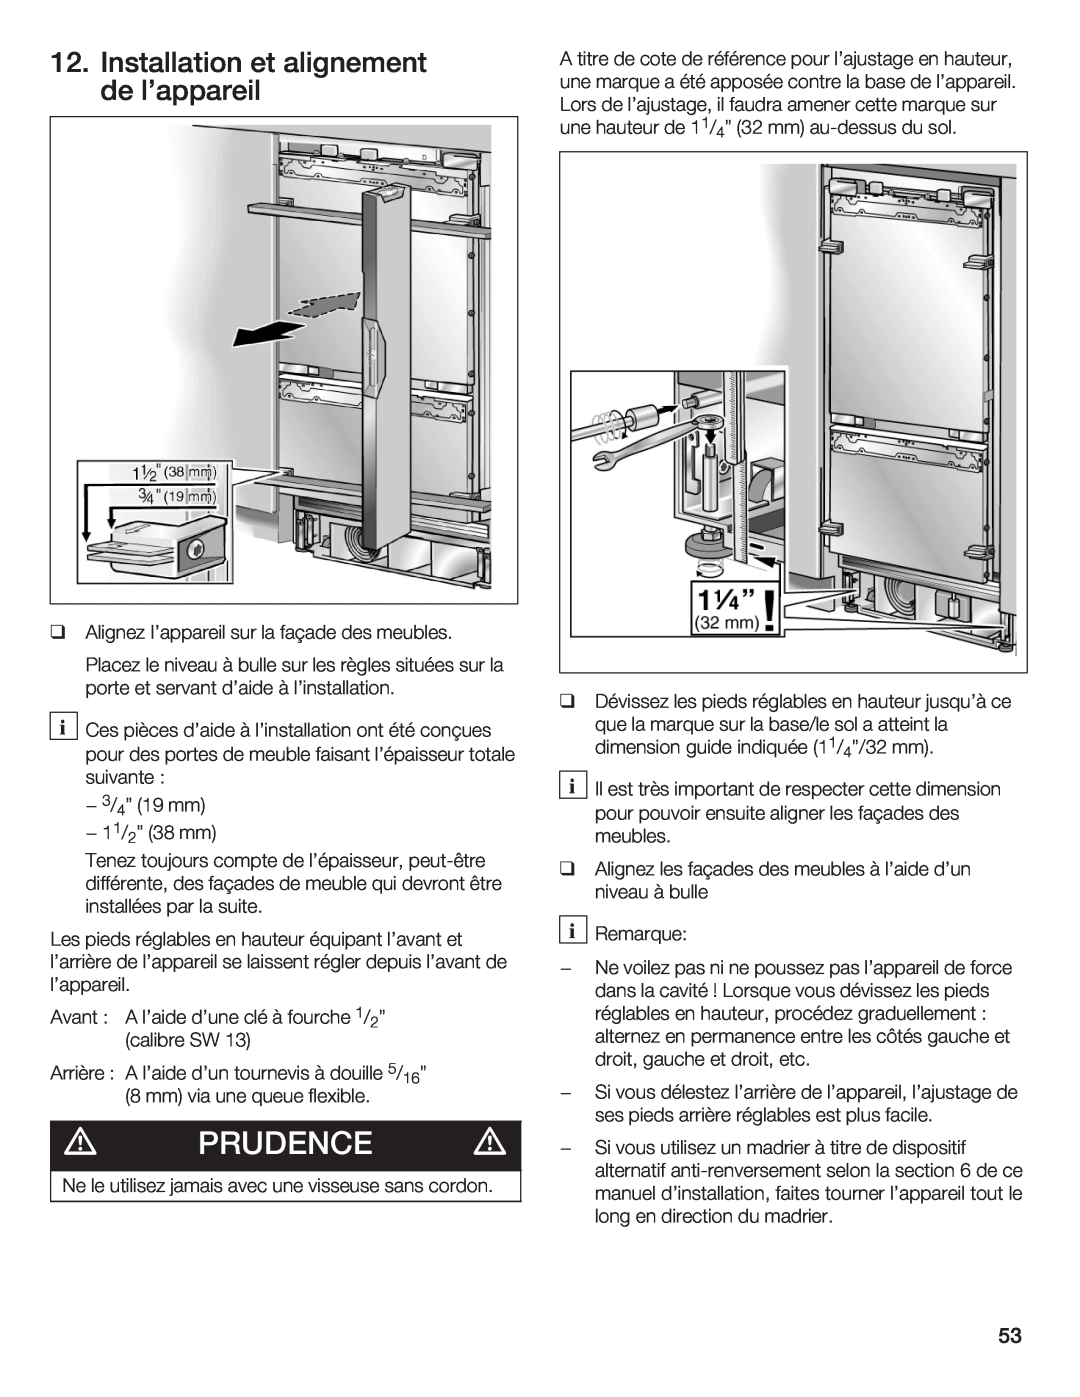 Thermador T36IB70NSP manual Prudence, Installation et alignement de lappareil 